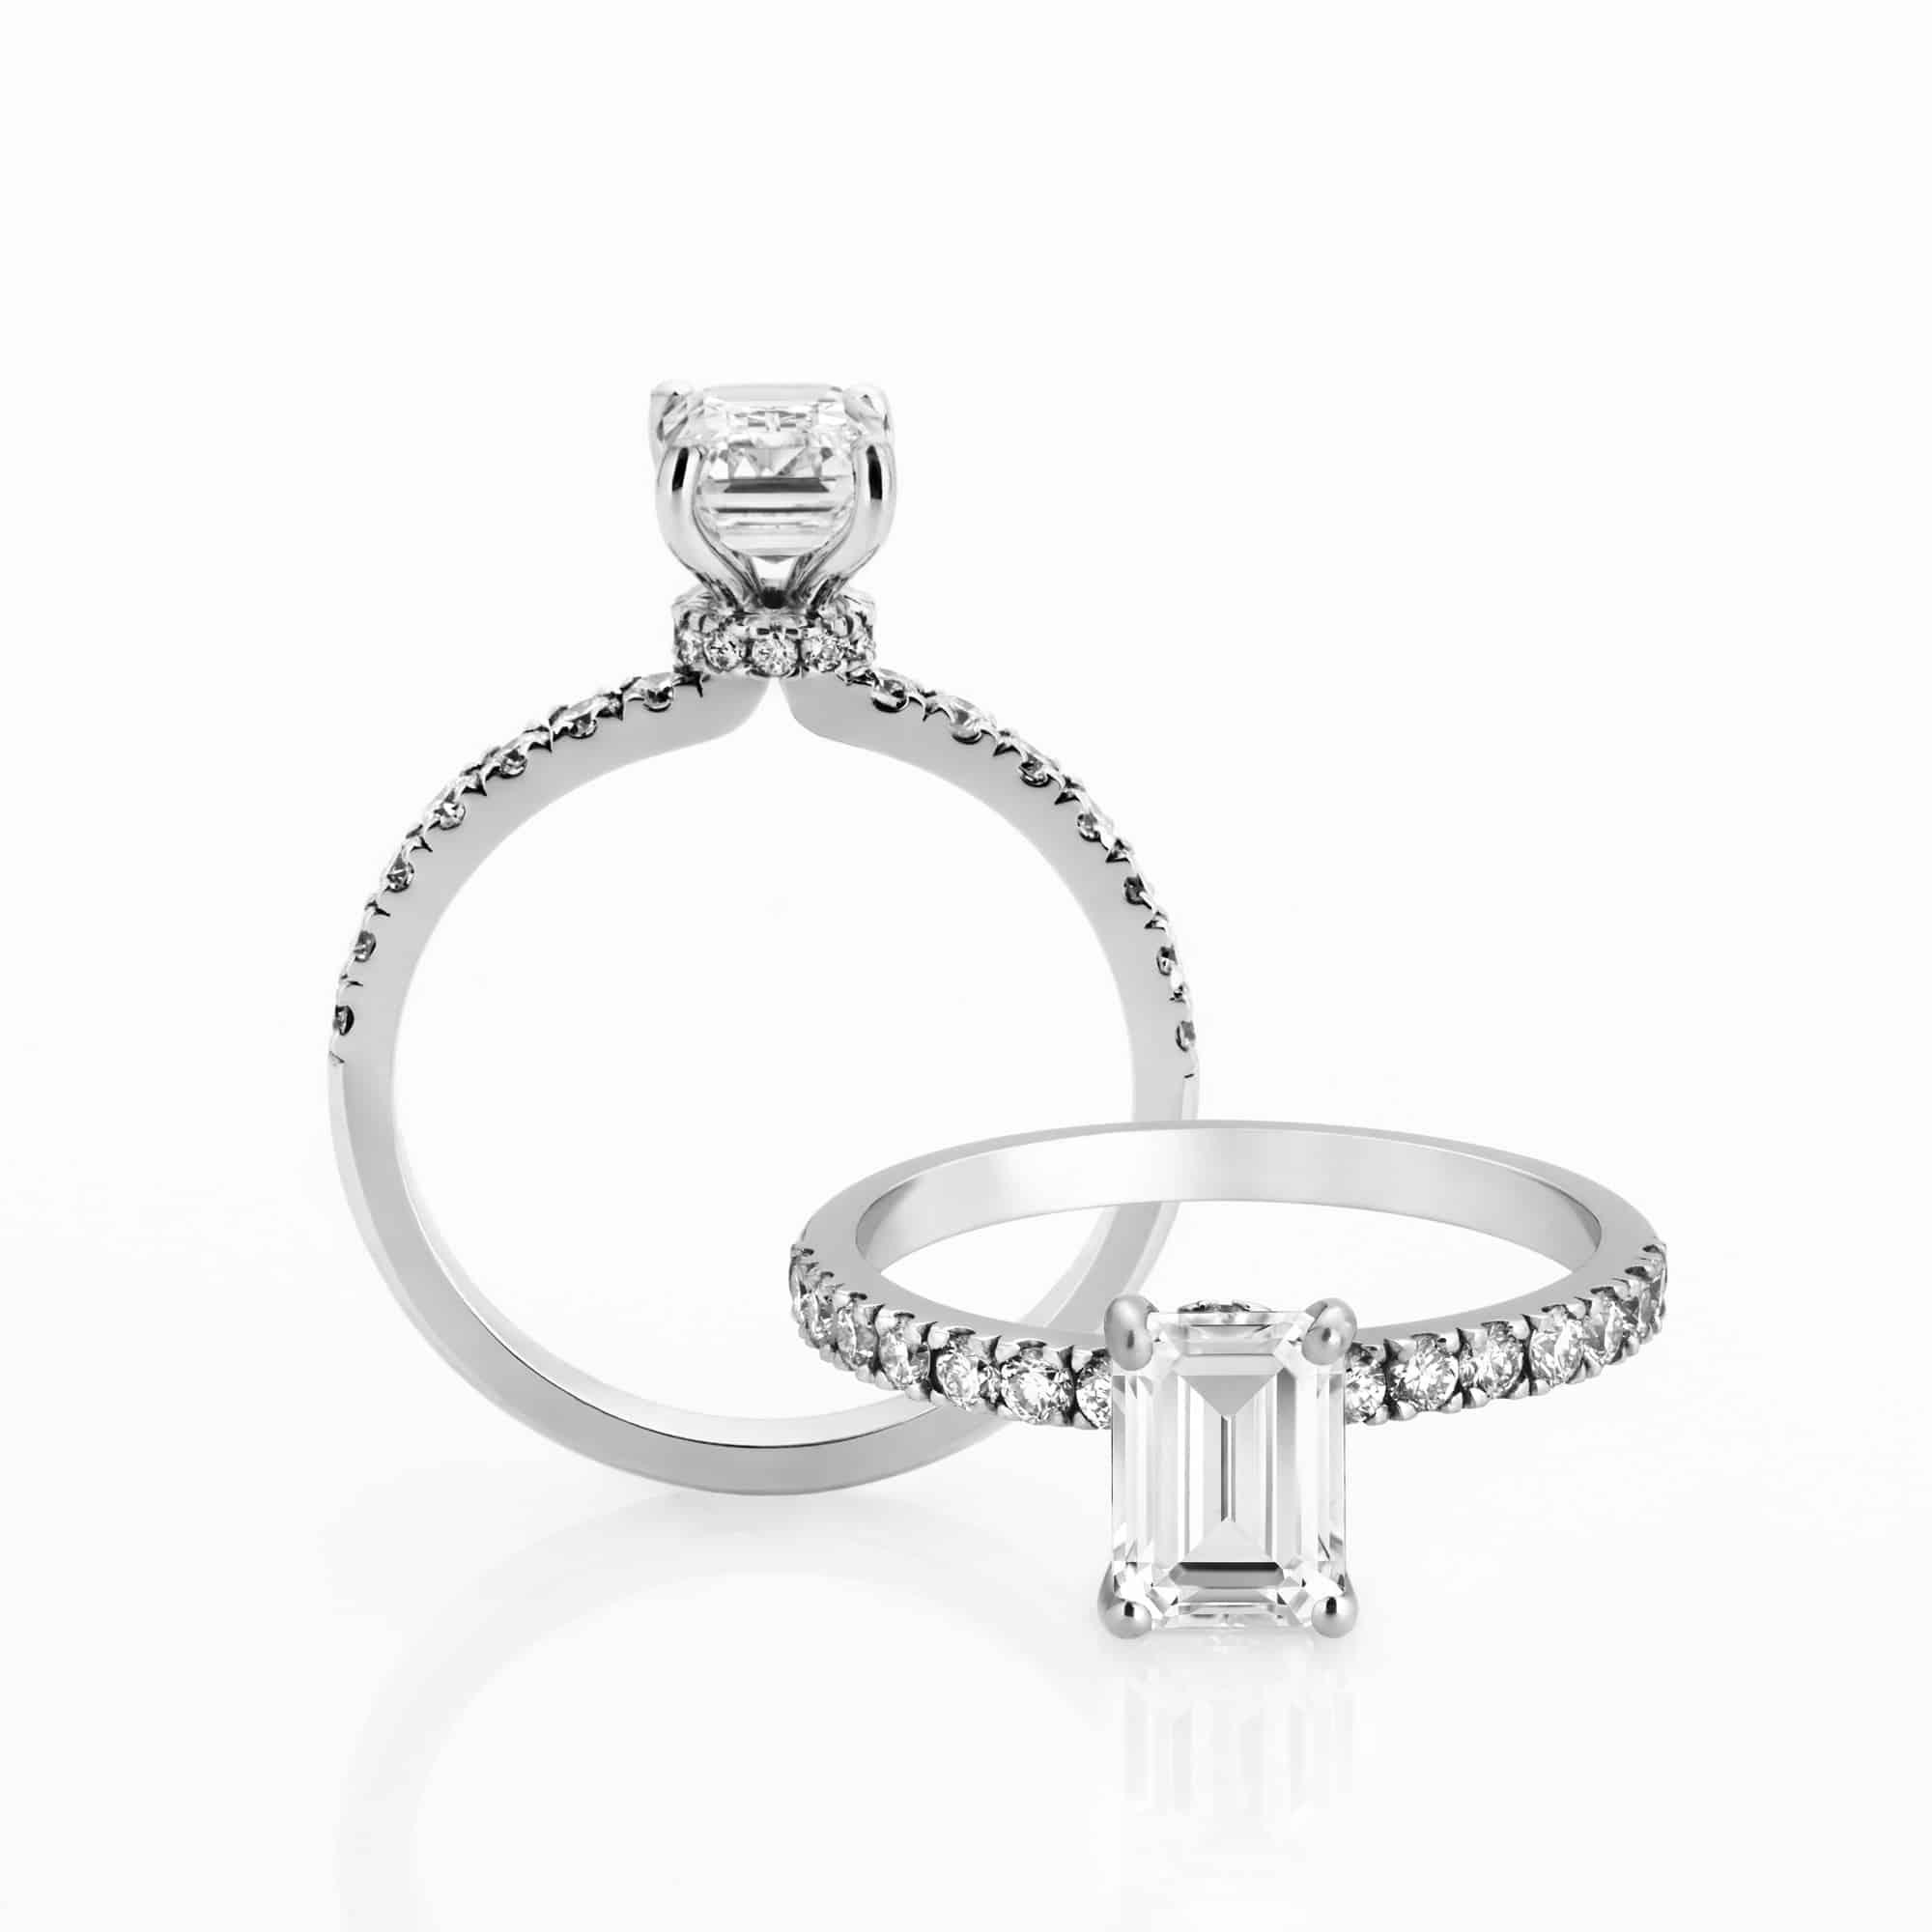 Orion diamond shoulder ring